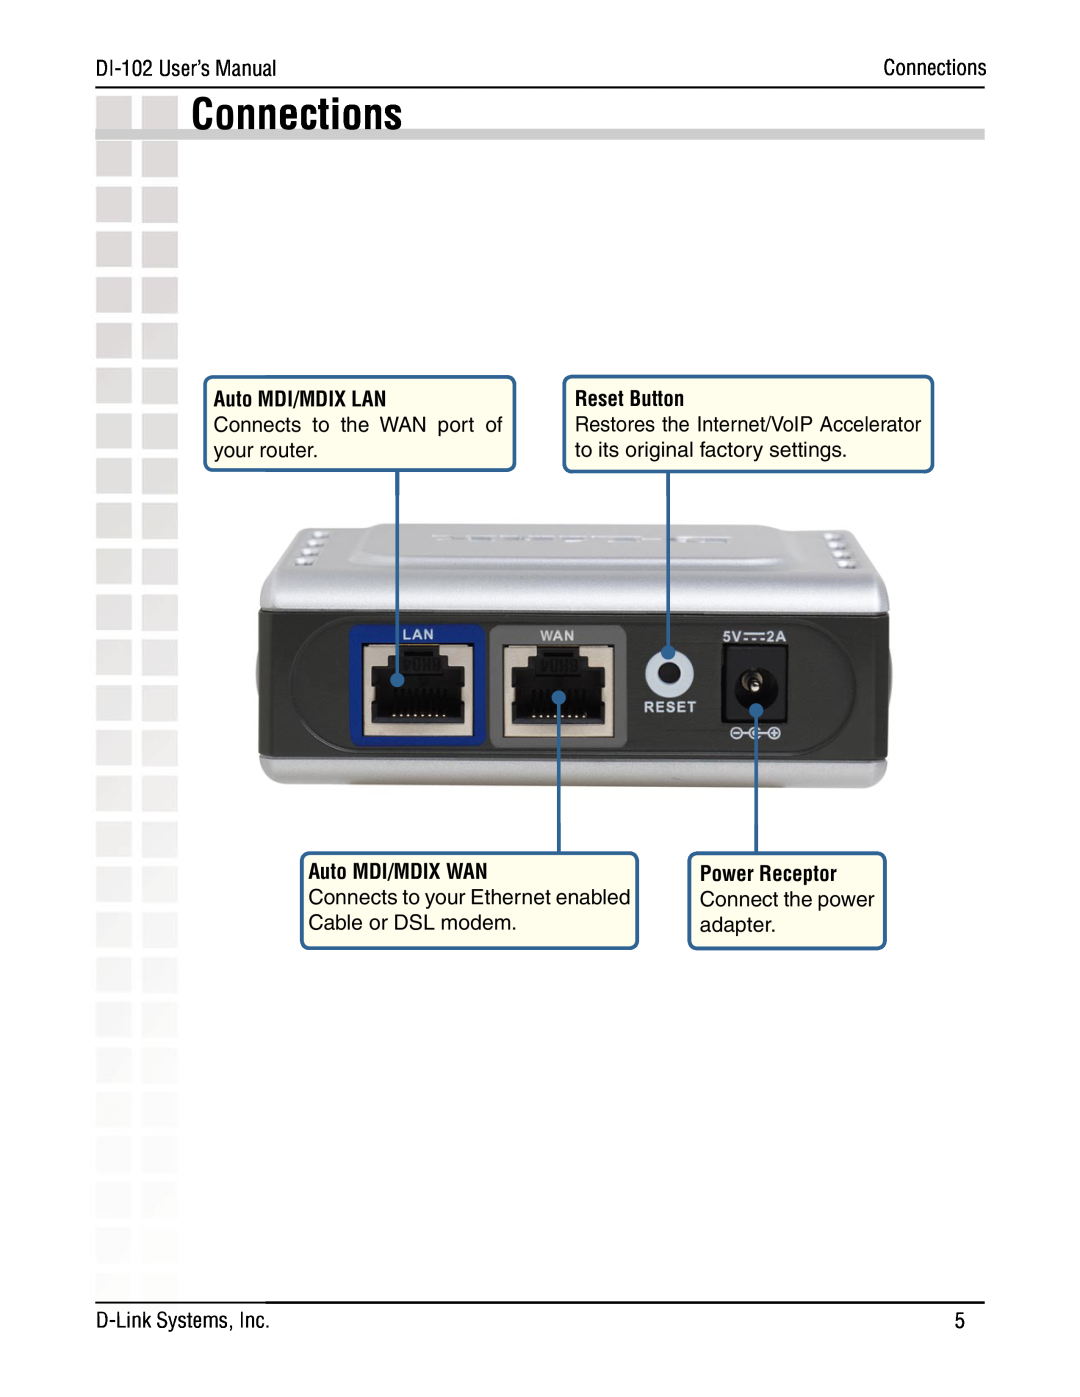 D-Link Internet/VoIP Accelerator, DI-102 manual Connections, Auto MDI/MDIX LAN, Reset Button, Auto MDI/MDIX WAN 